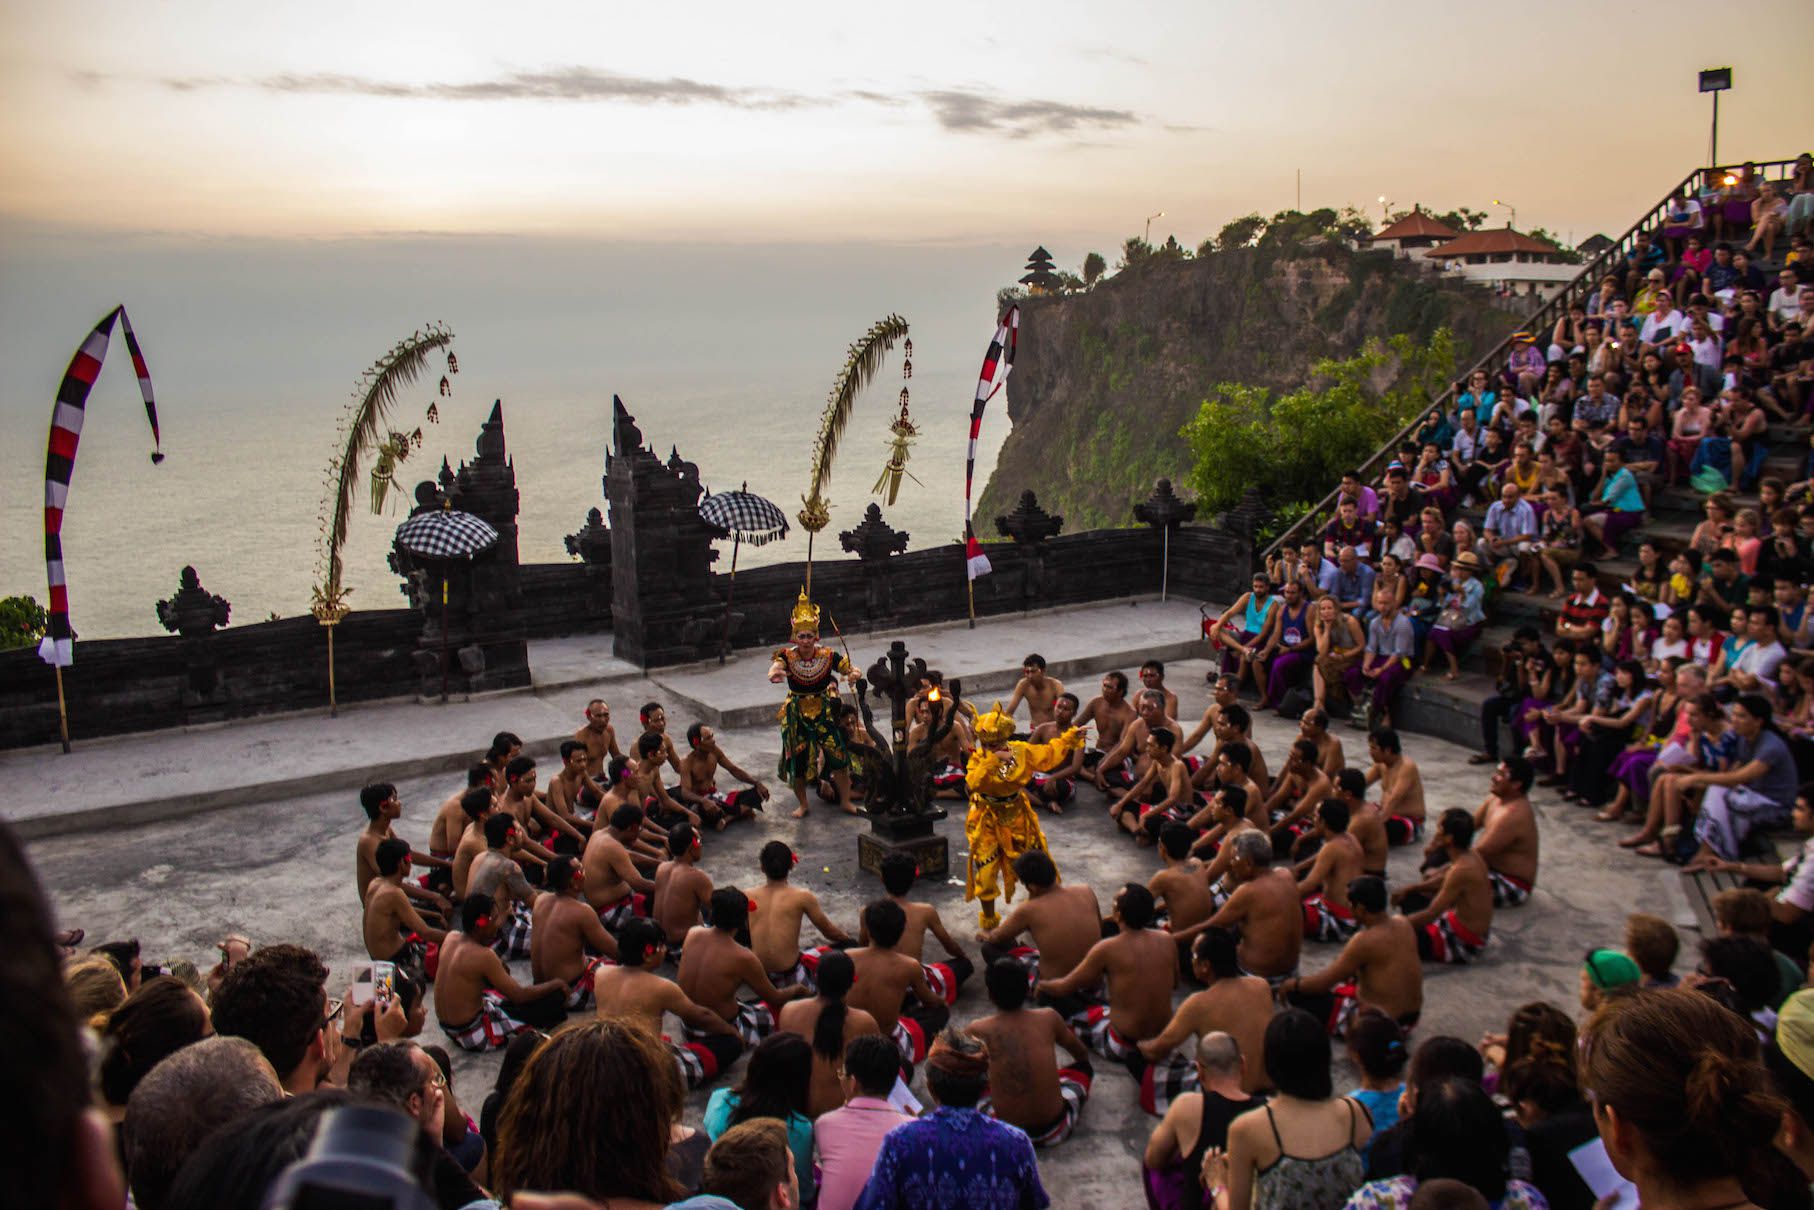 Kecak dance performed during sunset over Uluwatu, Bali, Indonesia